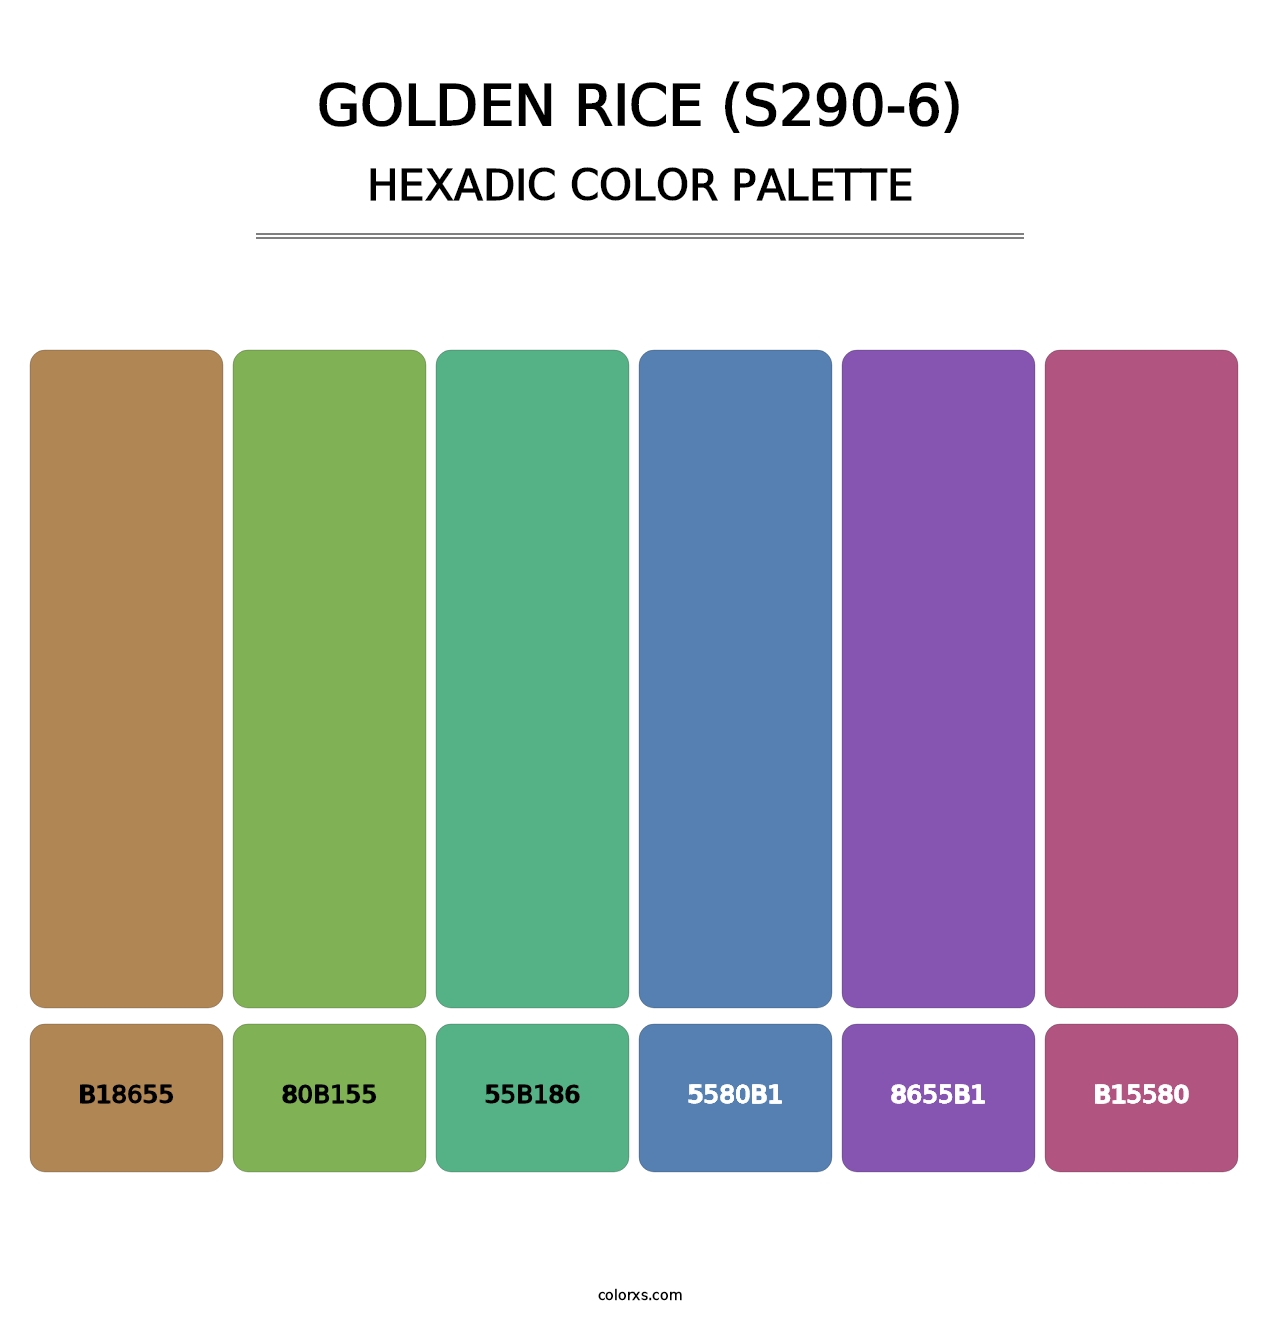 Golden Rice (S290-6) - Hexadic Color Palette